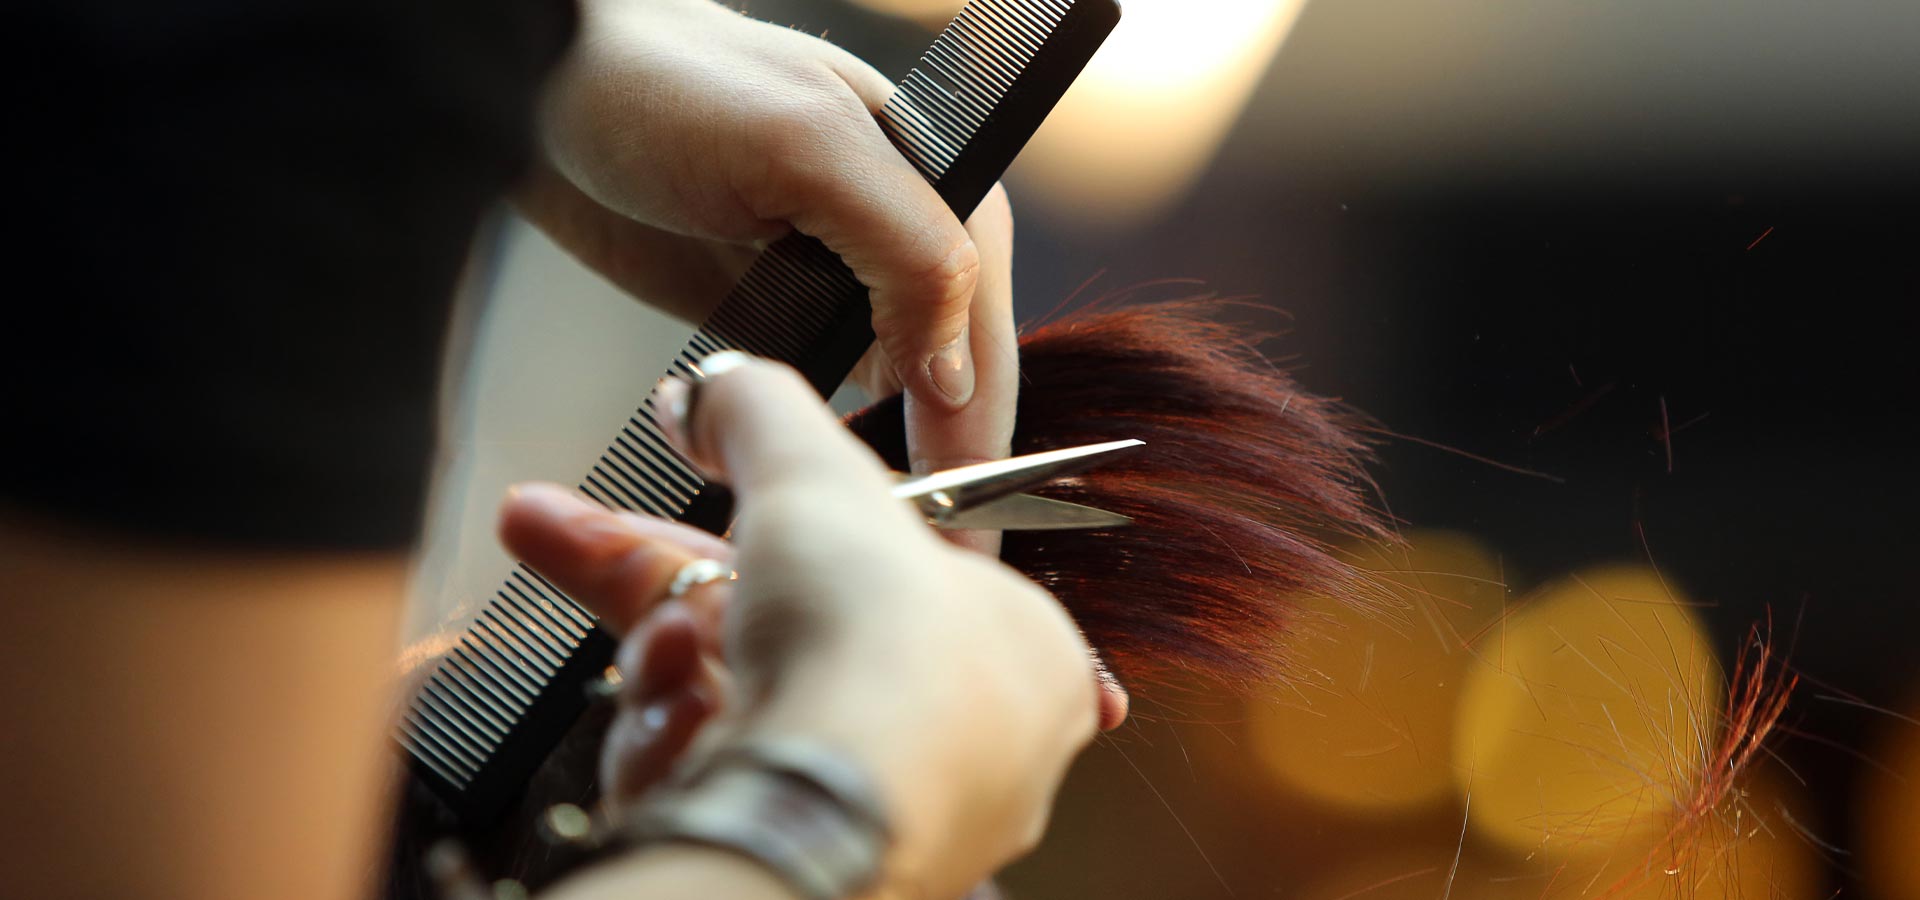 Levity Hair Studio: Hair services for women & men, nails, massage & more